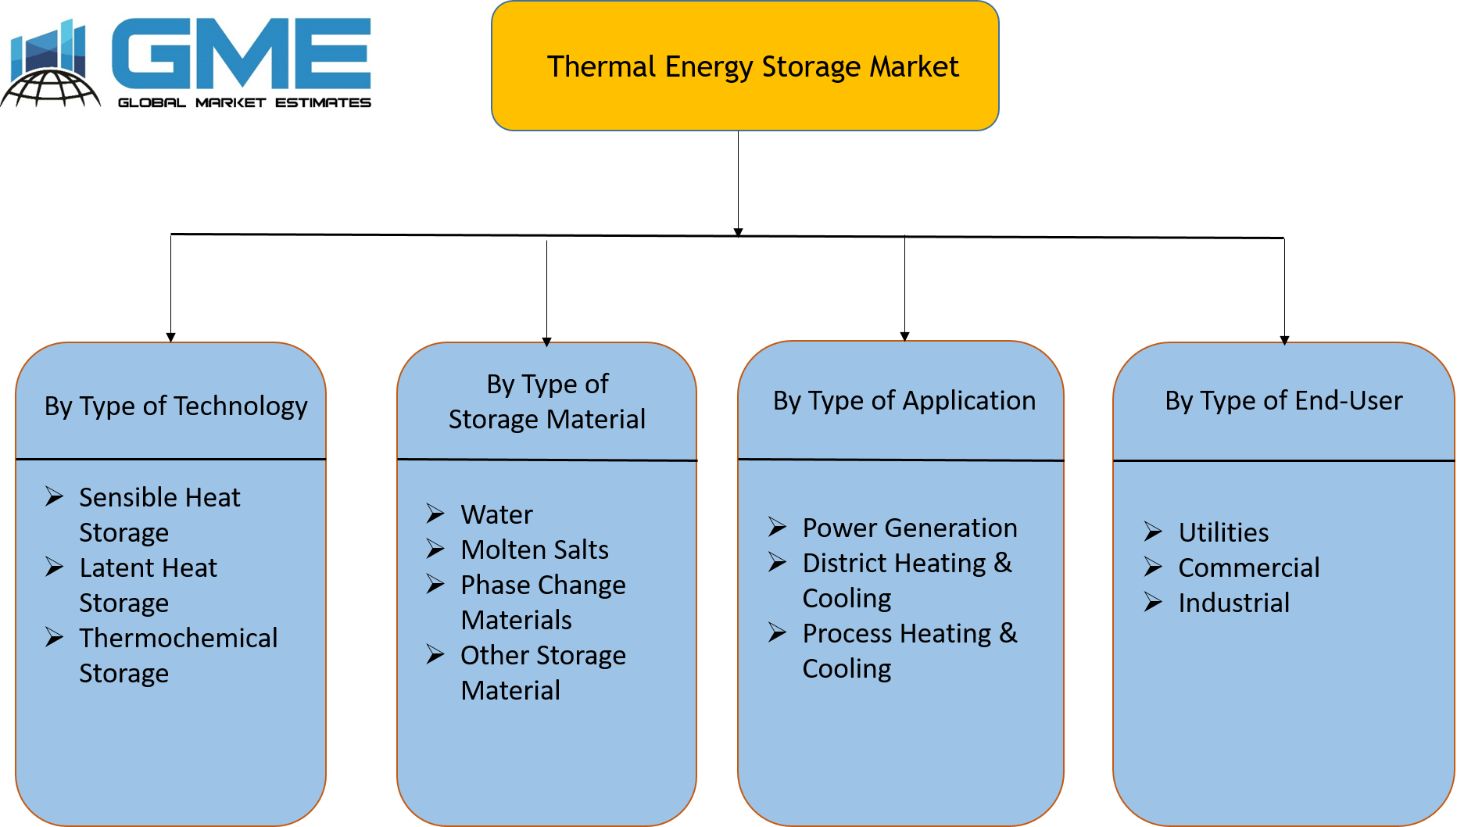 Thermal Energy Storage Market Segmentation